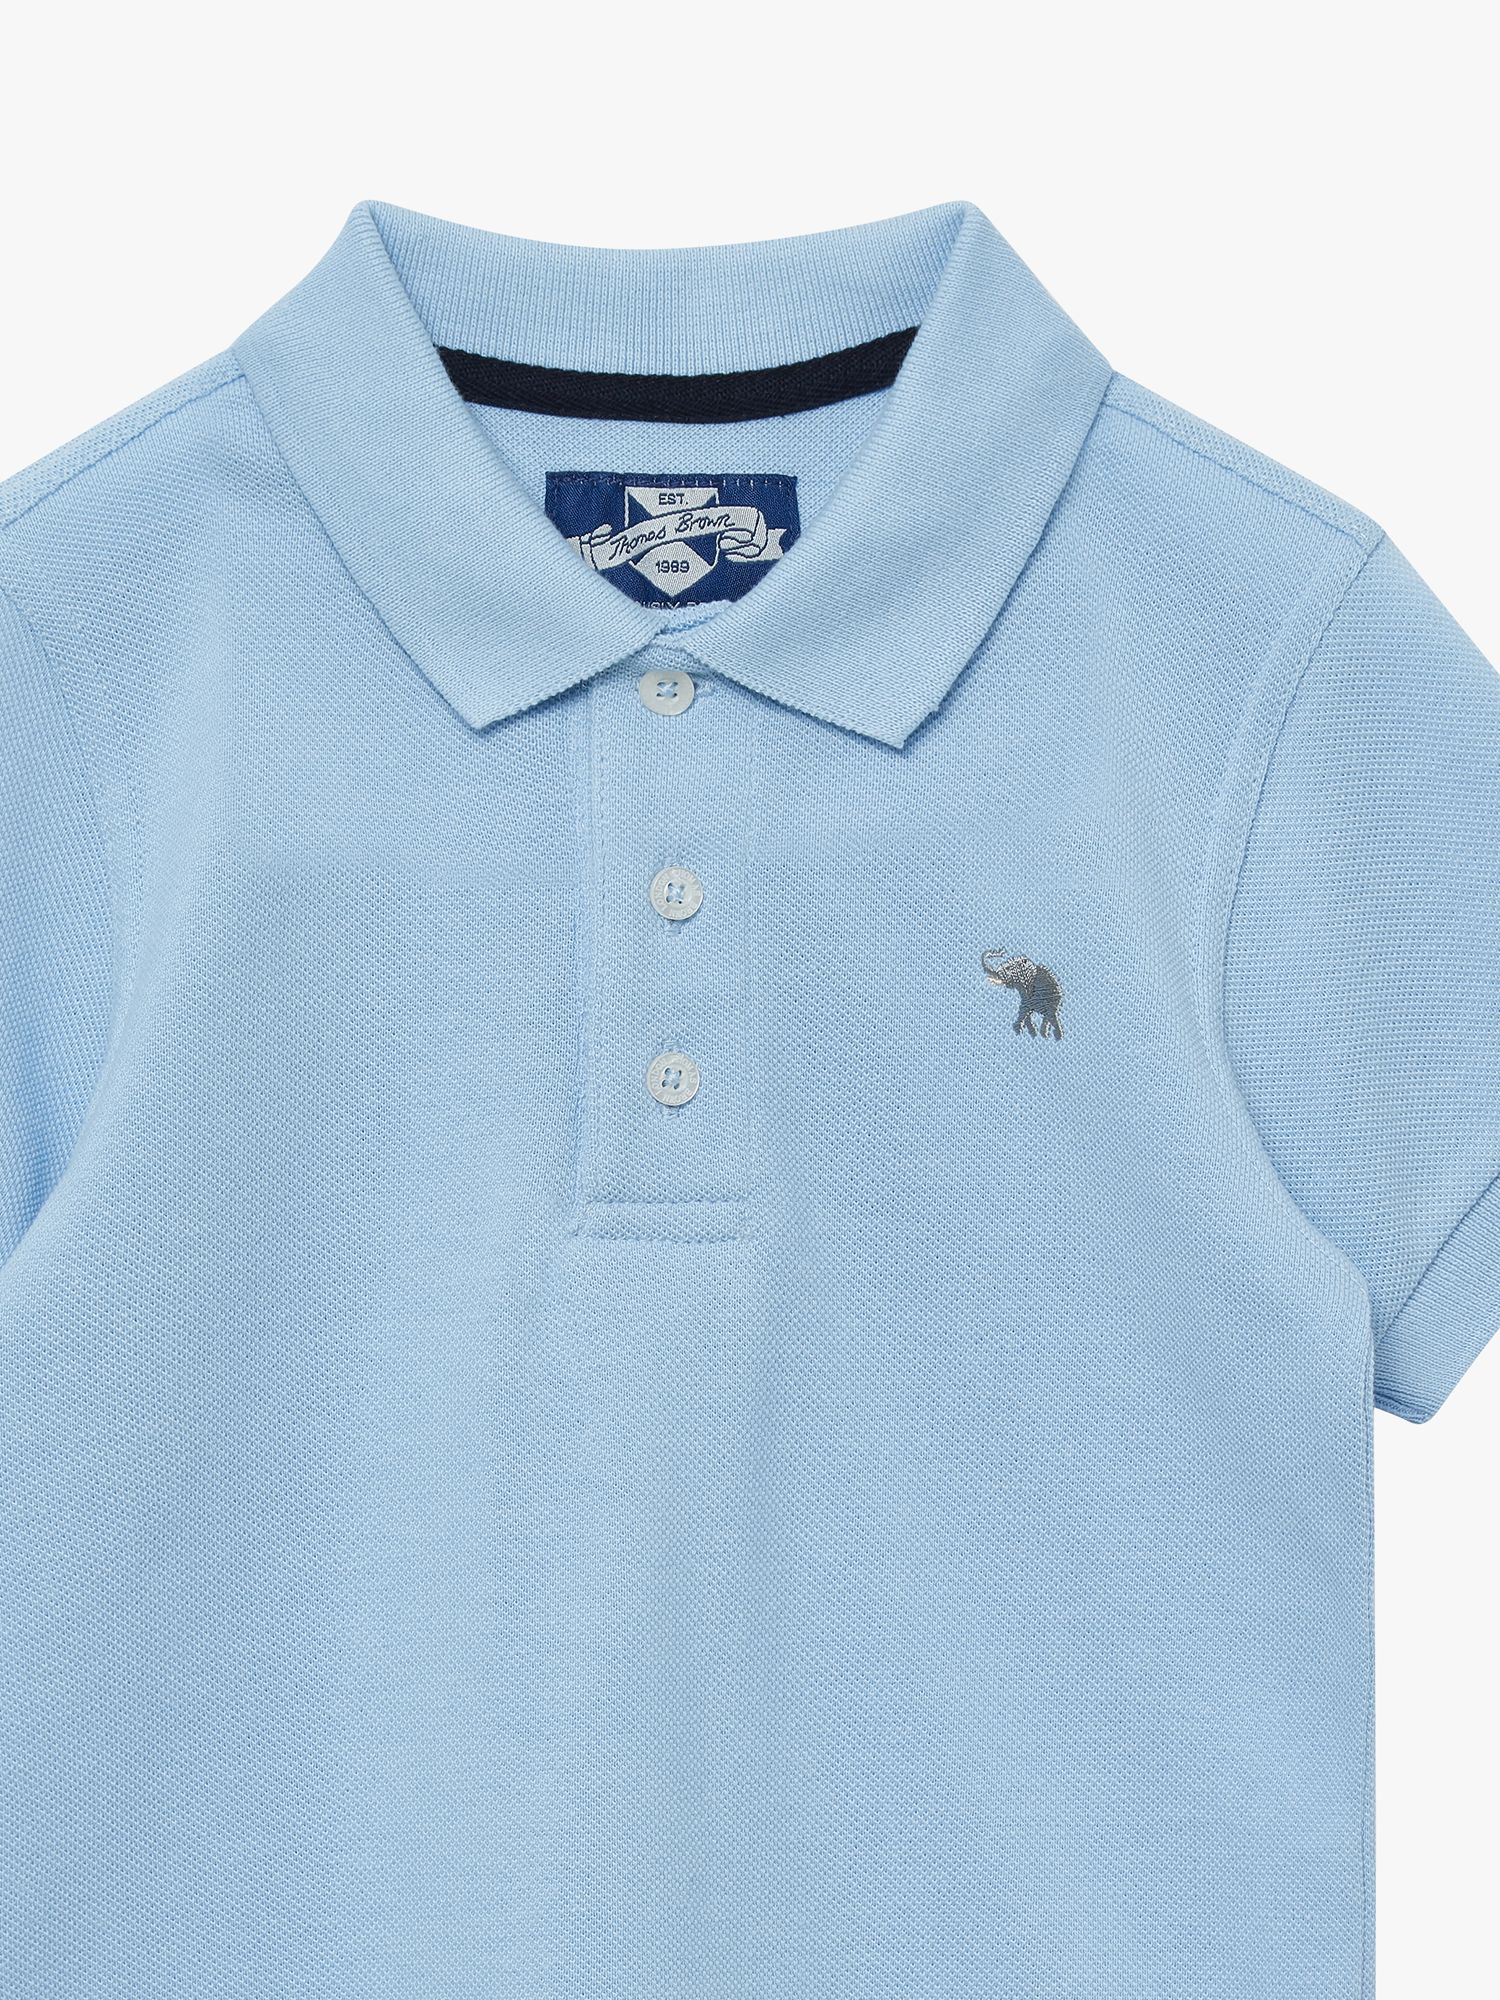 Trotters Kids' Harry Pique Polo Shirt, Pale Blue at John Lewis & Partners